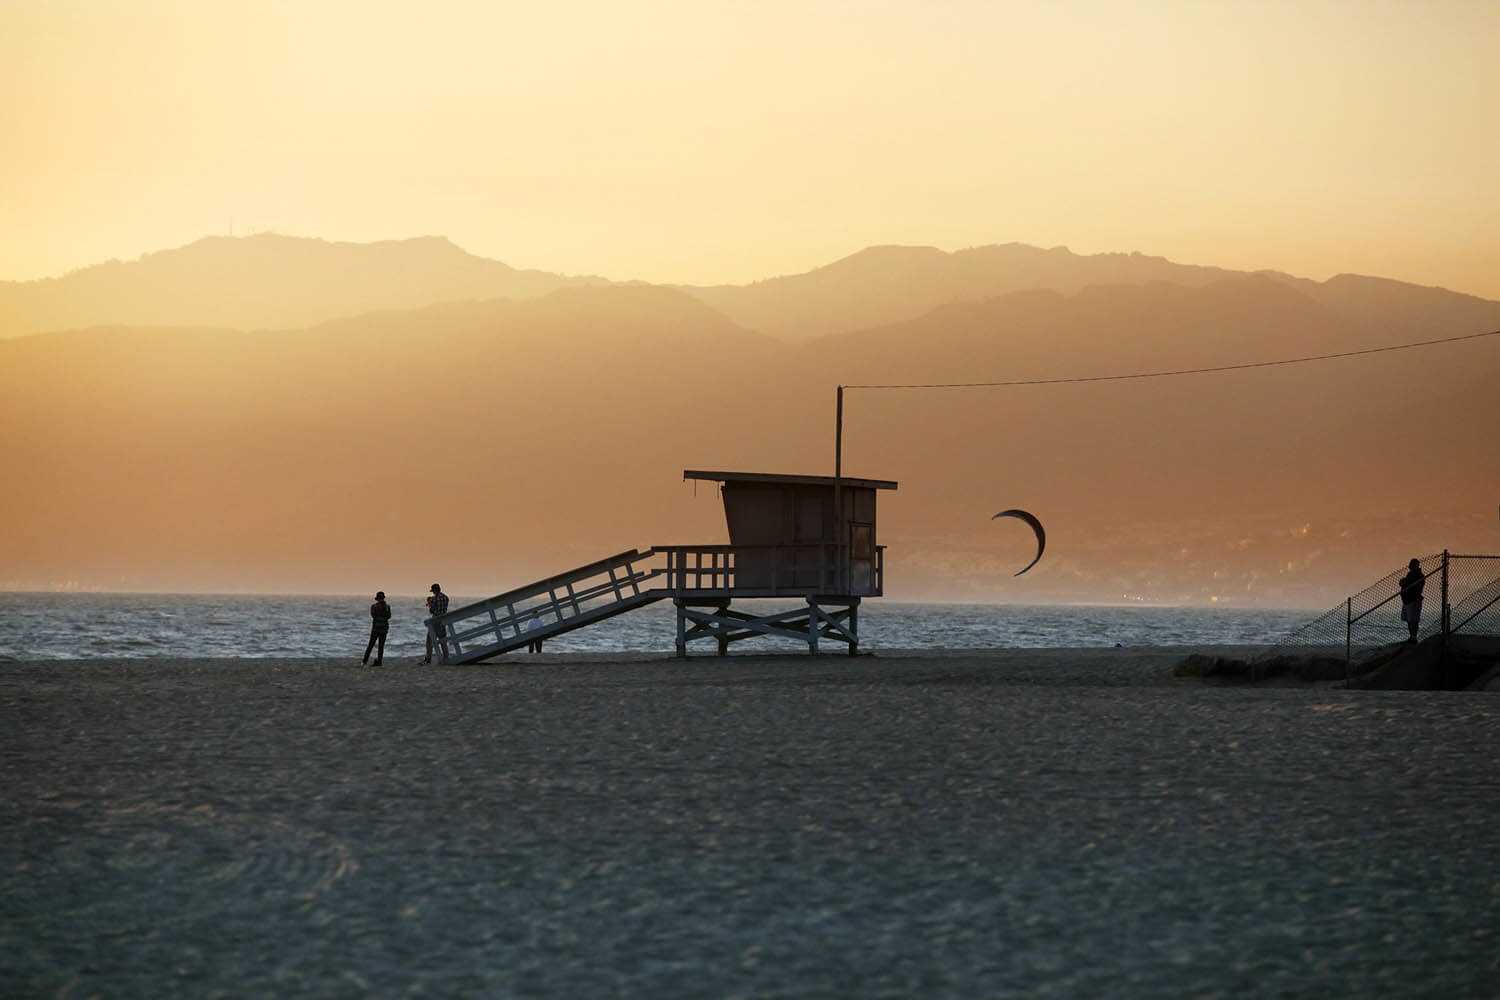 Venice Beach sightseeing tour: A sunset-filled horizon